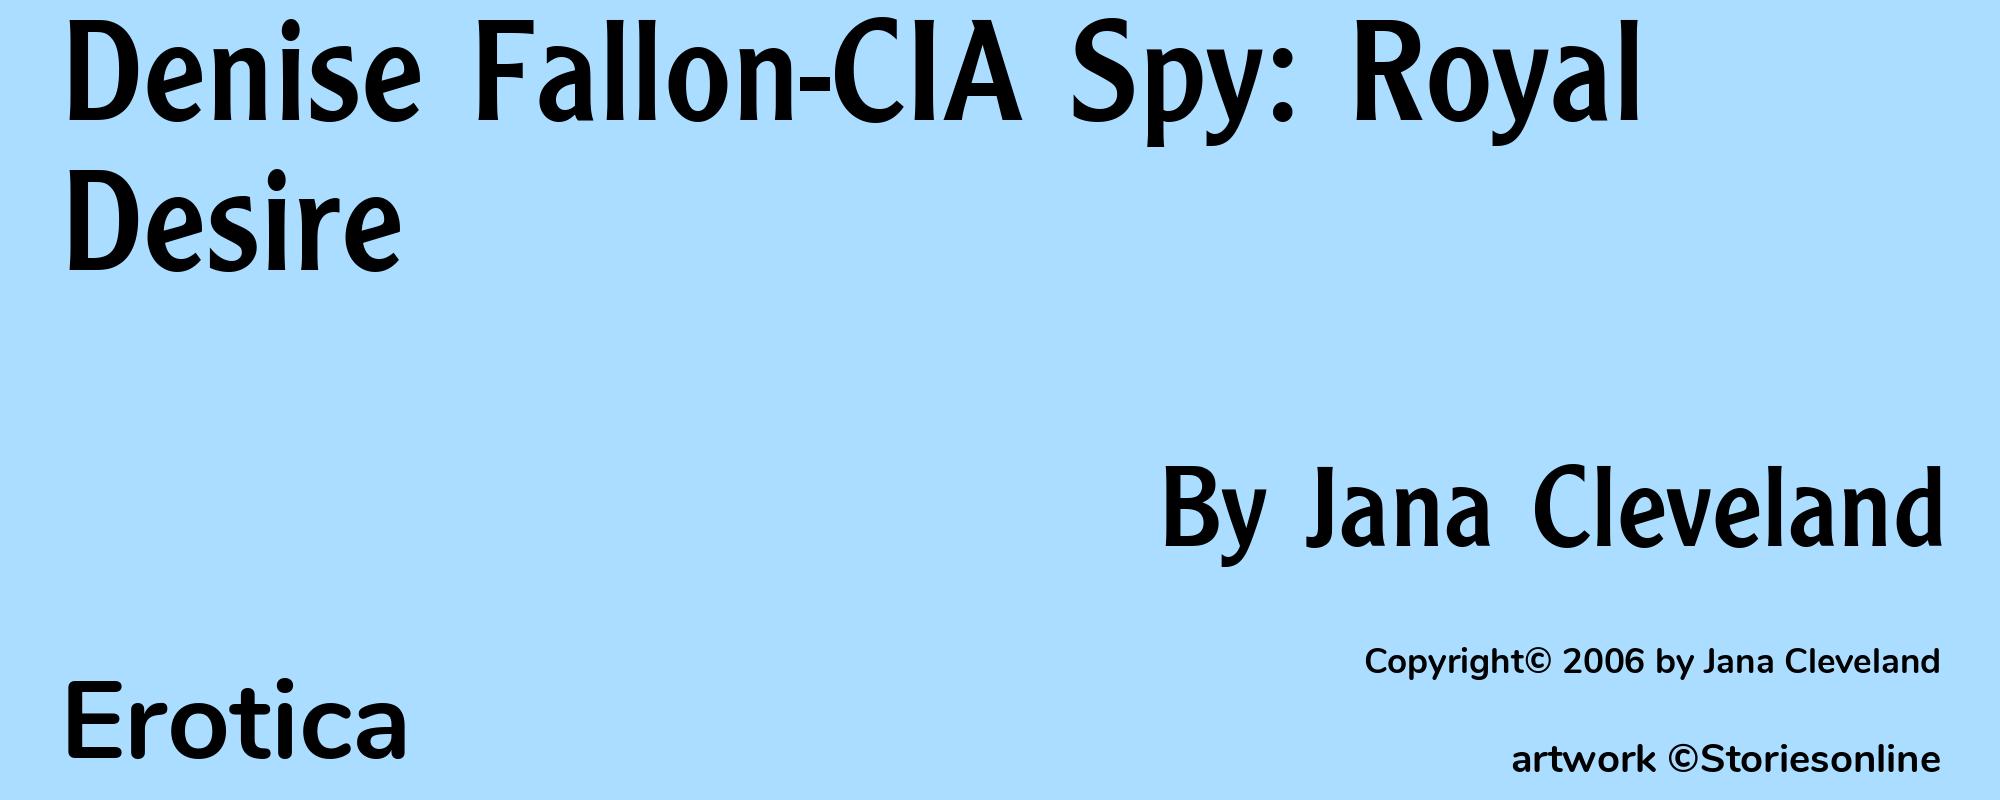 Denise Fallon-CIA Spy: Royal Desire - Cover